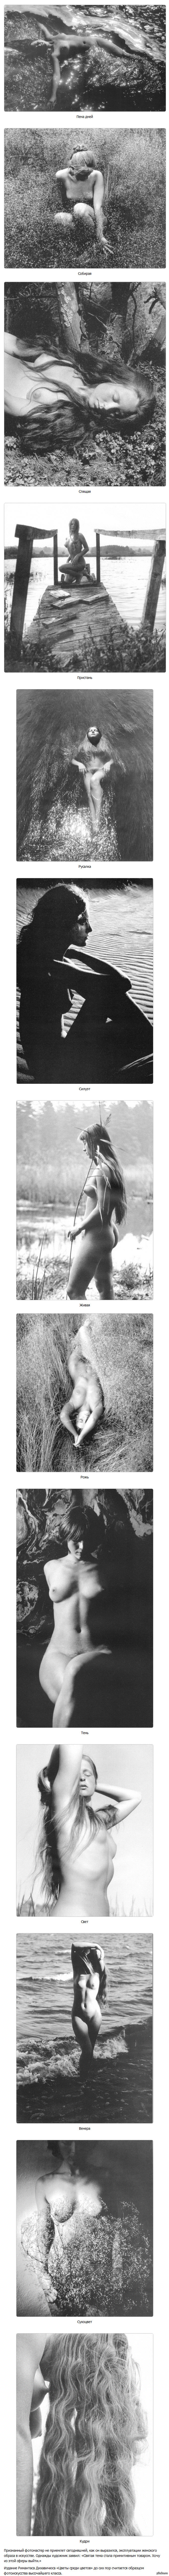 Classics of Soviet erotica. ch2 - NSFW, Classic, Erotic, Strawberry, Soviet, Photographer, , Part 2, Longpost